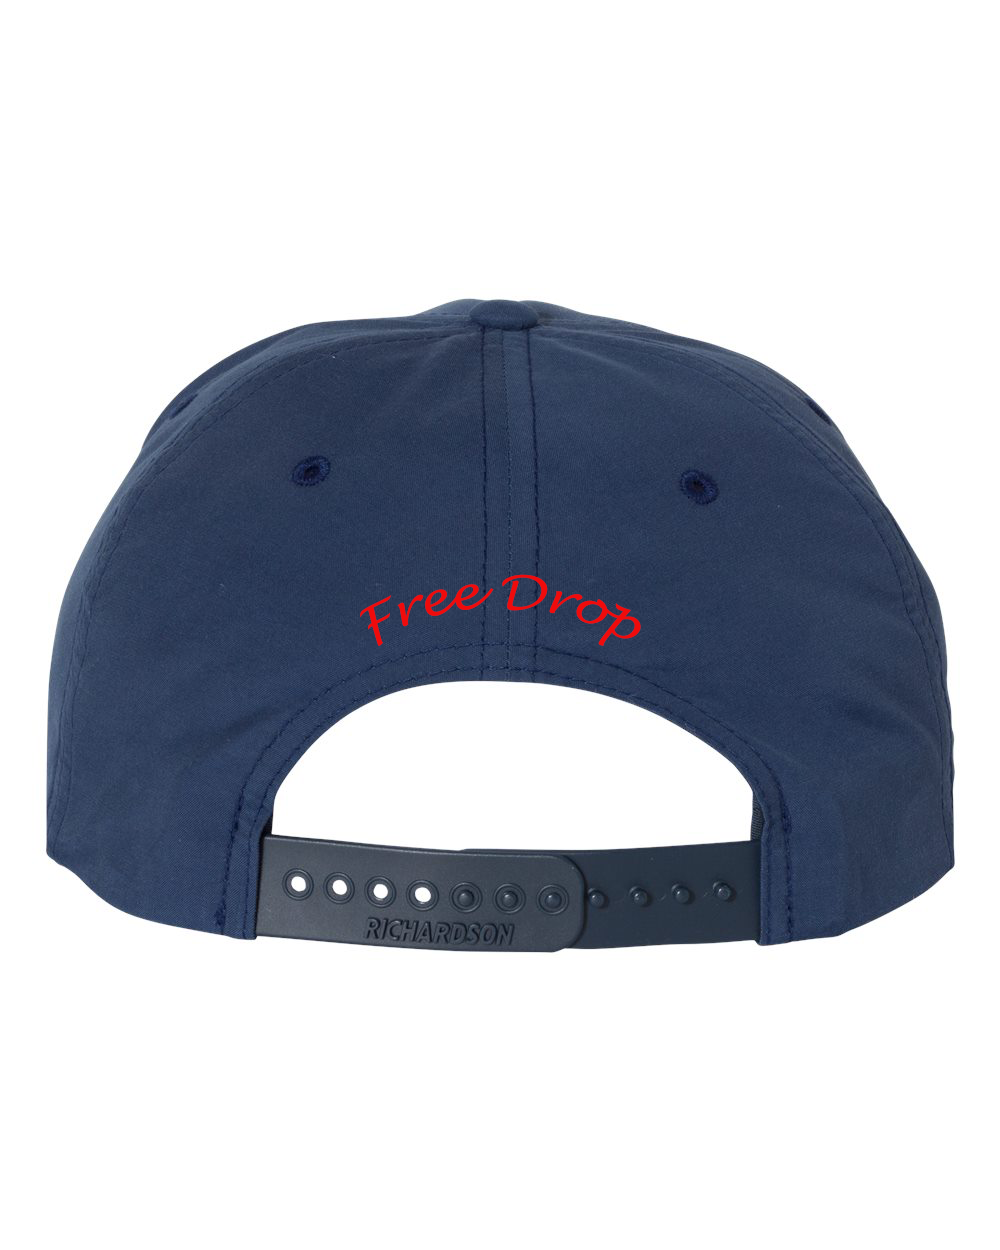 Richardson - 256 Umpqua Snapback Cap $11.05 - Headwear